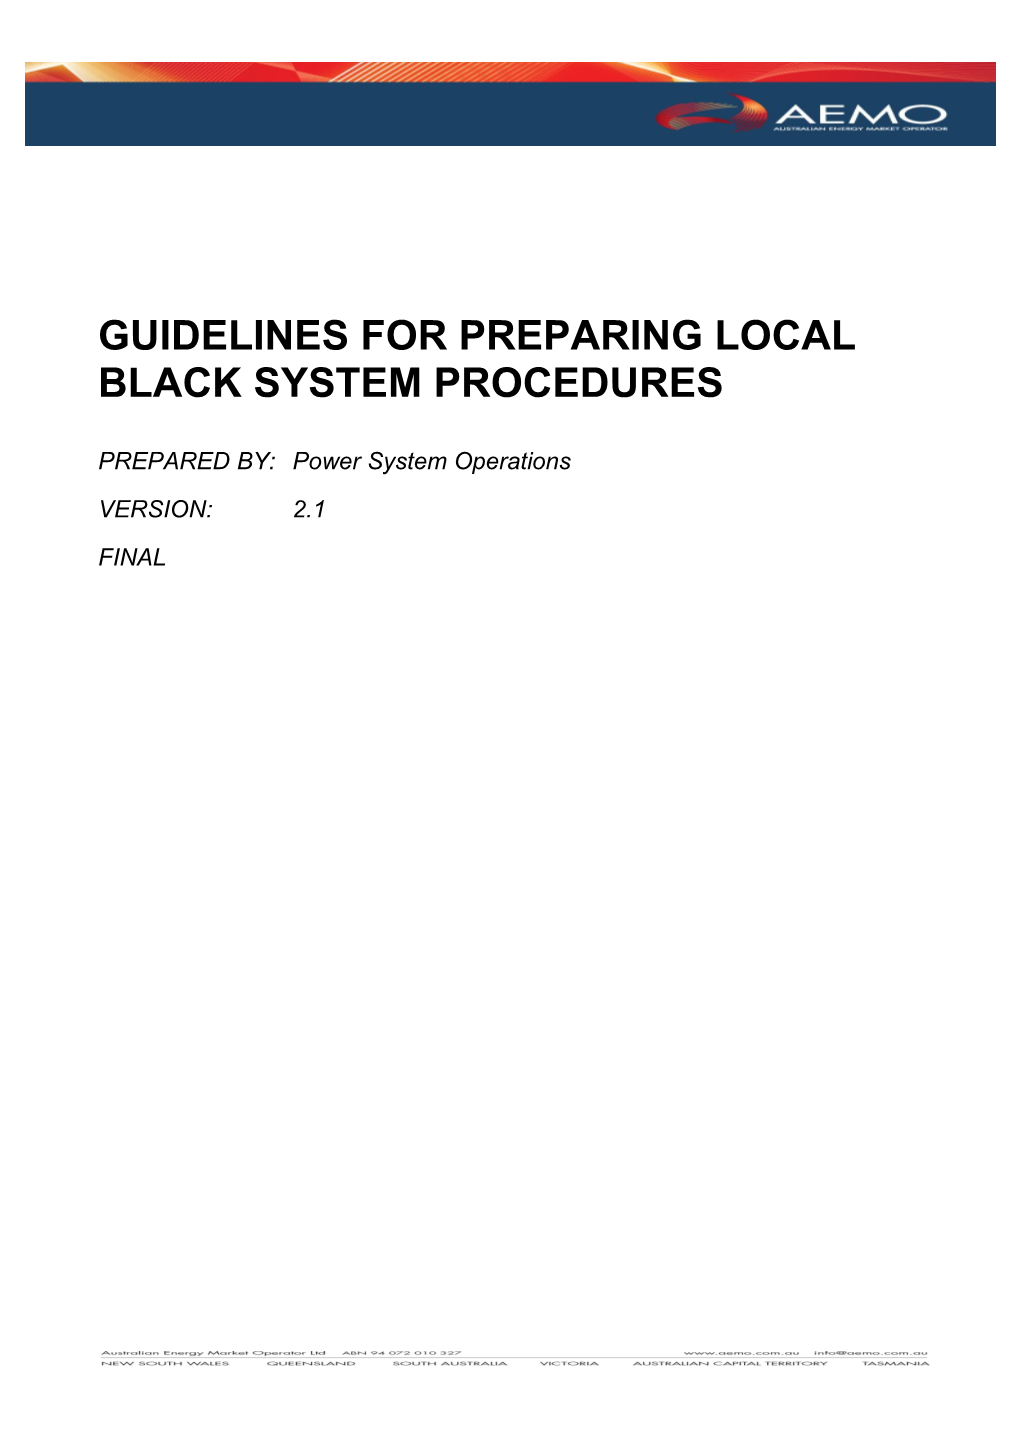 Guidelines for Preparing Local Black System Procedures